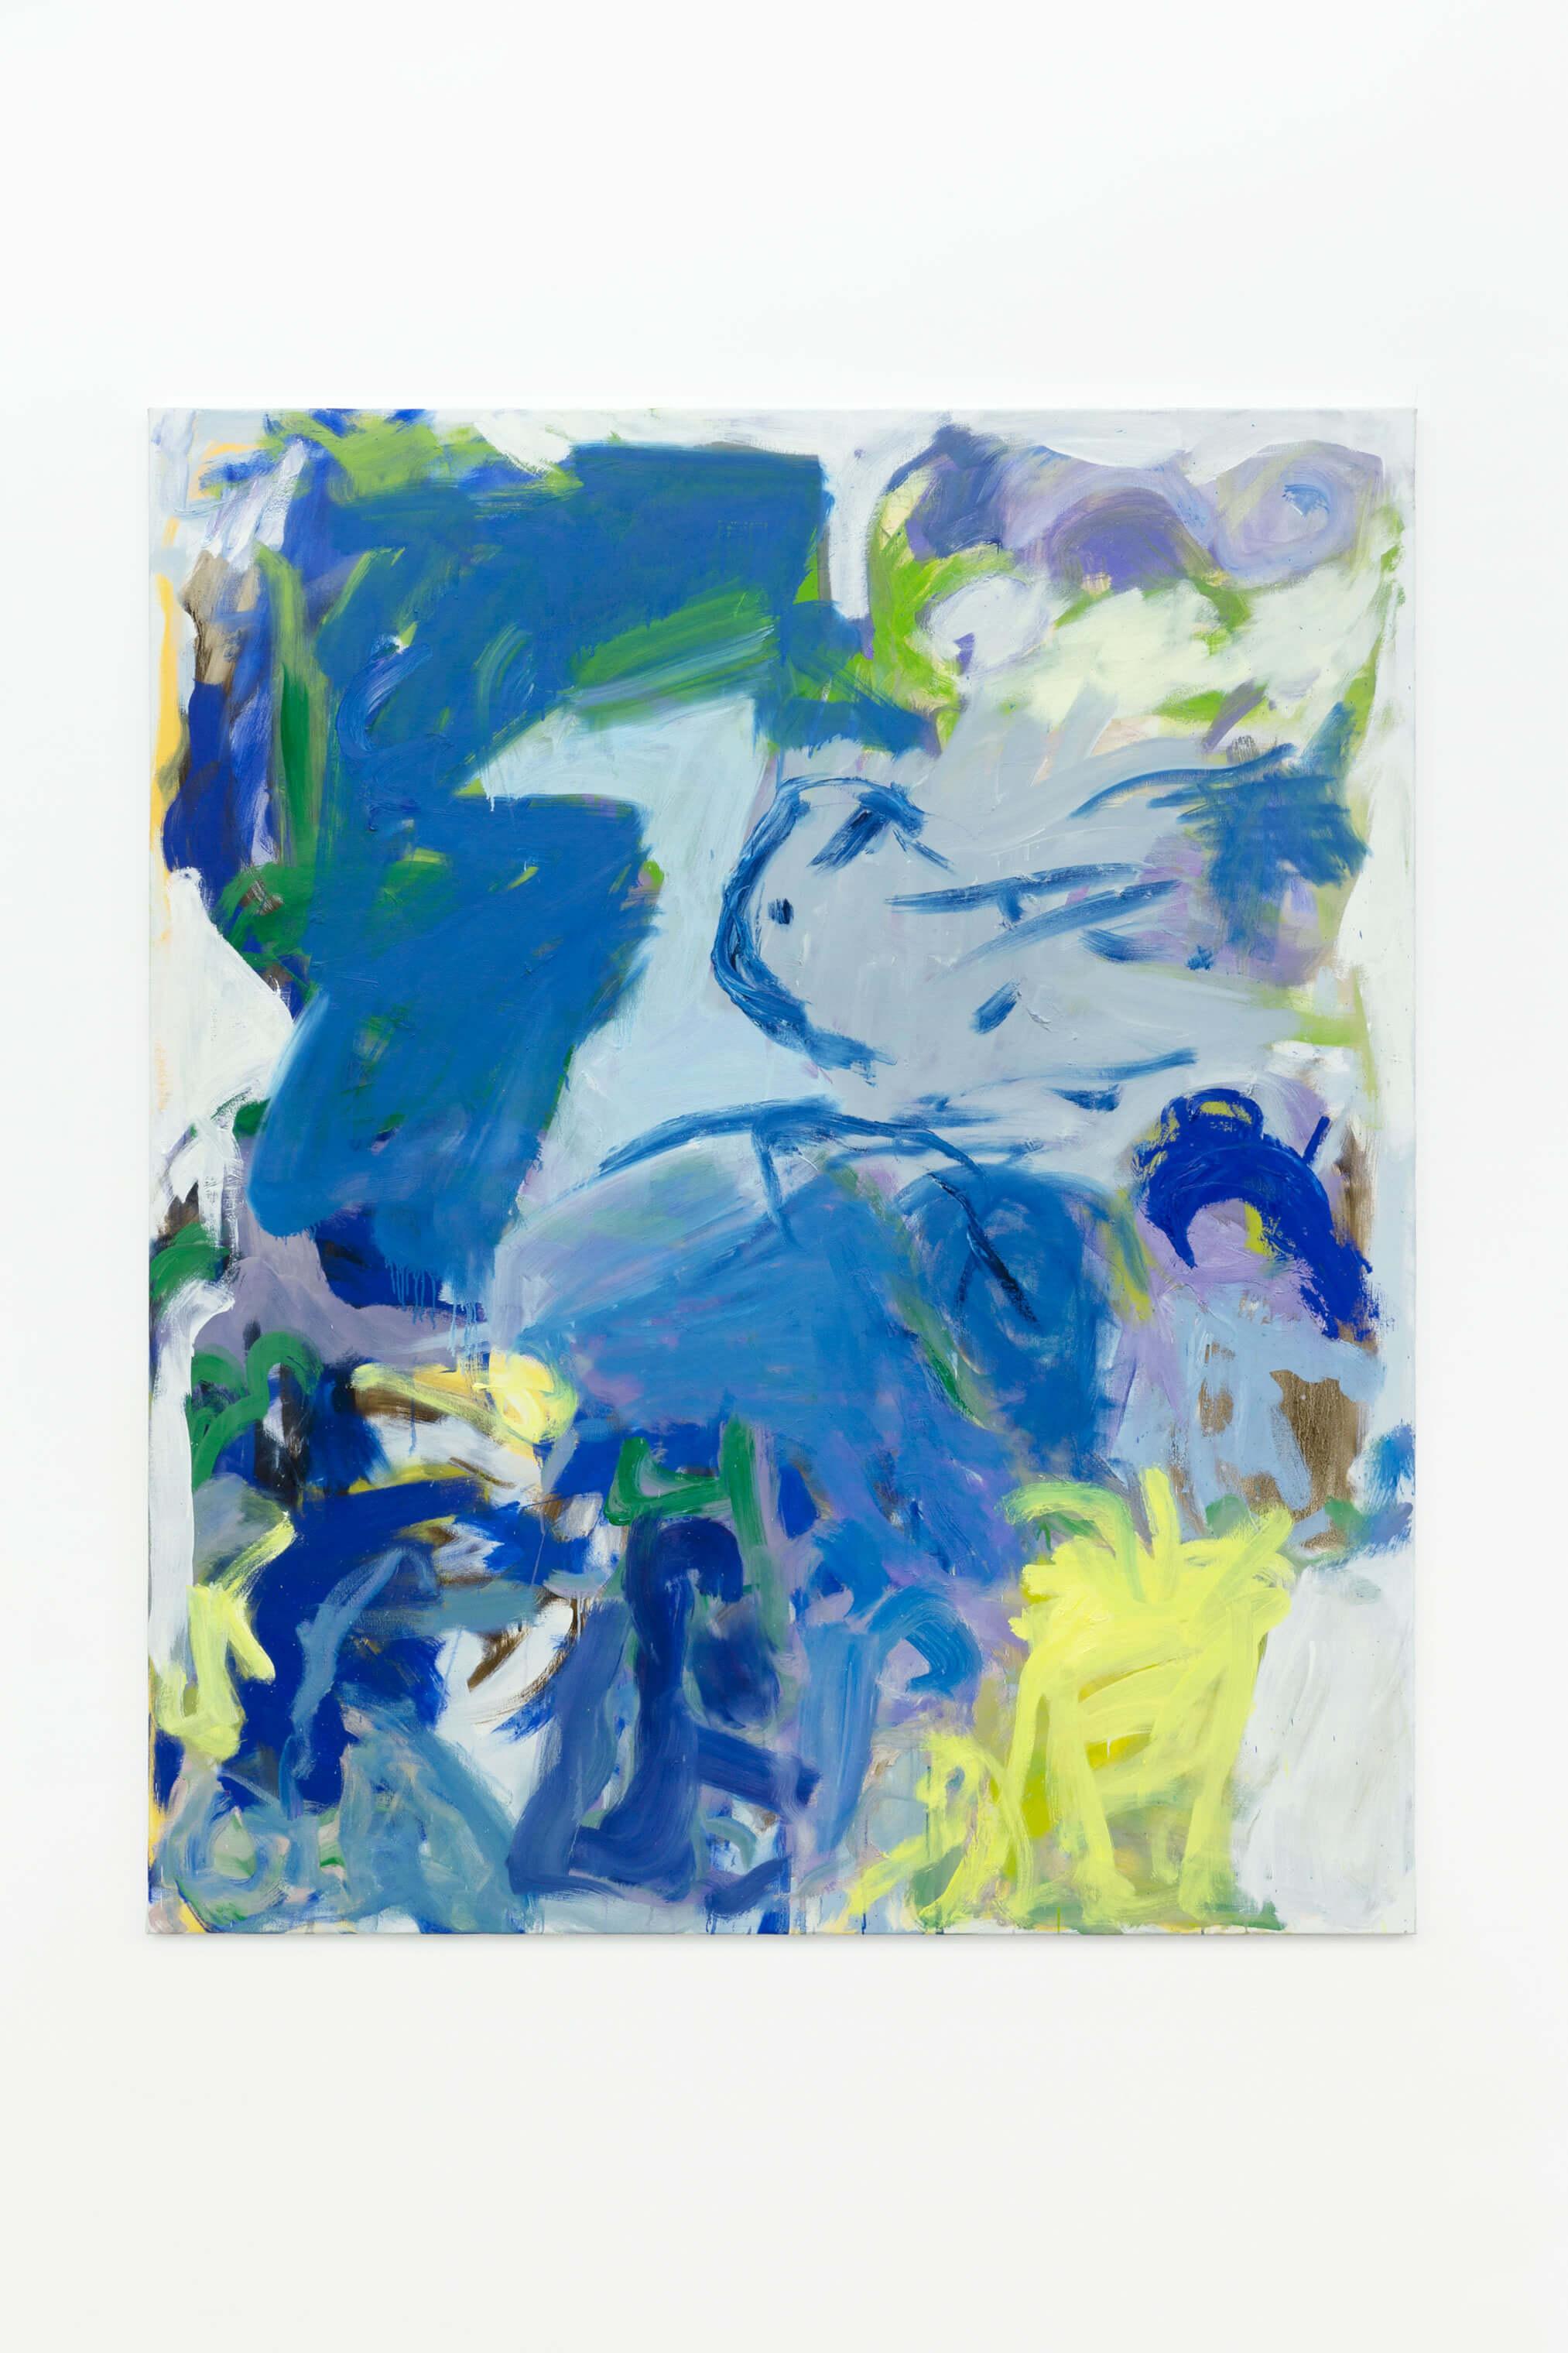 Joanne Robertson, Stranger Day, 2021; Oil on canvasâ€¨, 180 Ã— 150 cm â€¨/ Courtesy the artist, Edouard Montassut, and Drei, Cologne